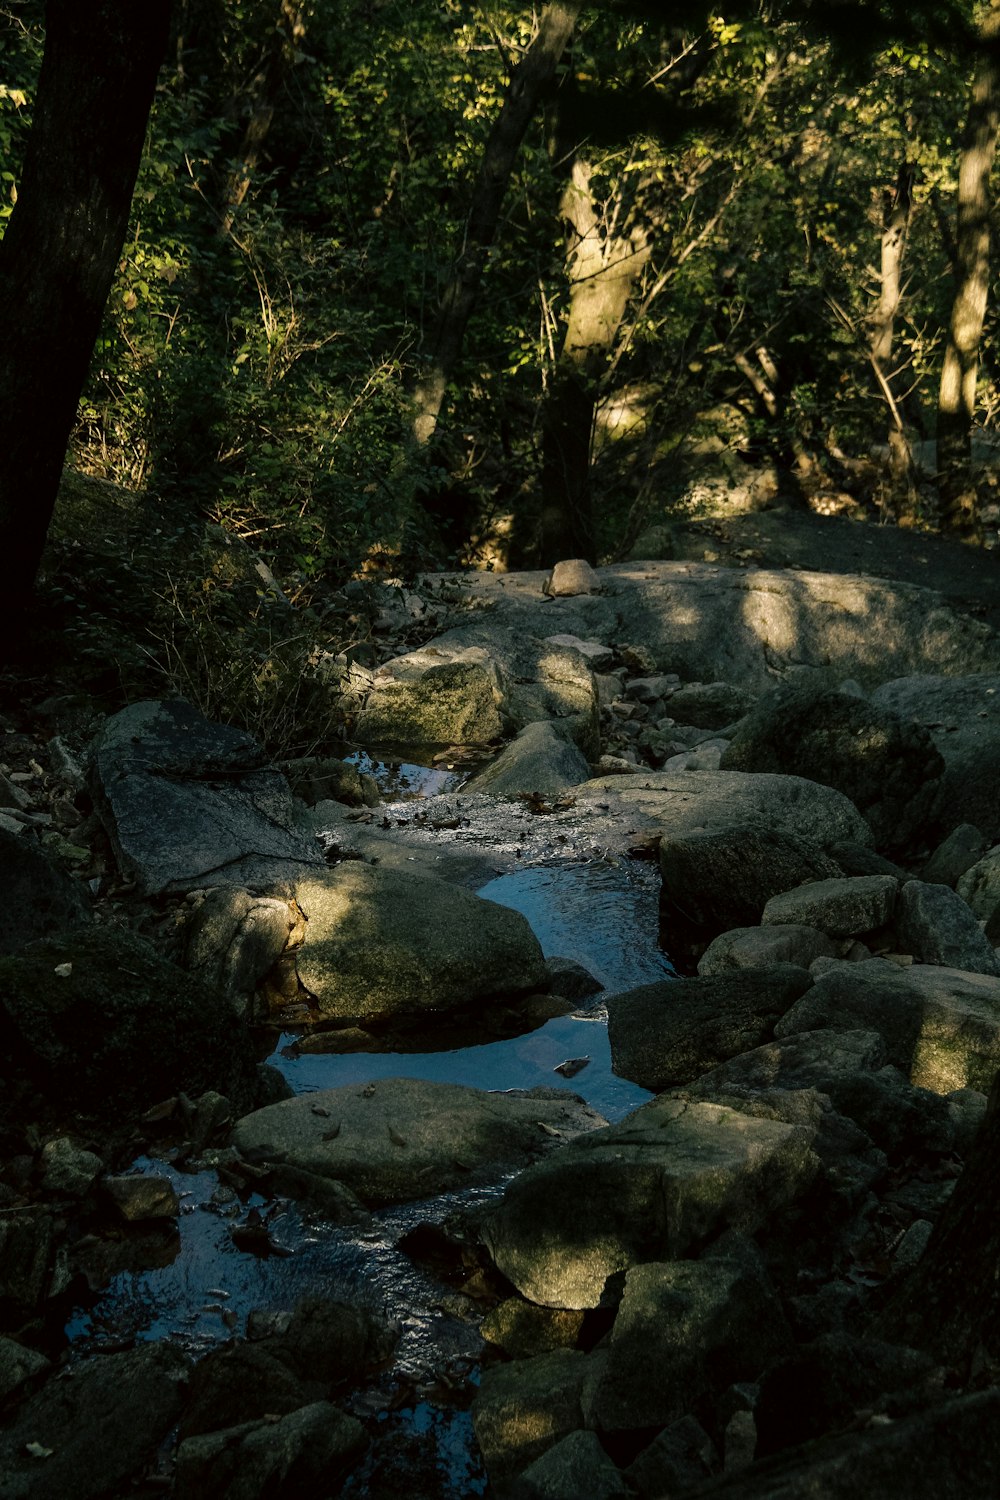 a stream running through a lush green forest